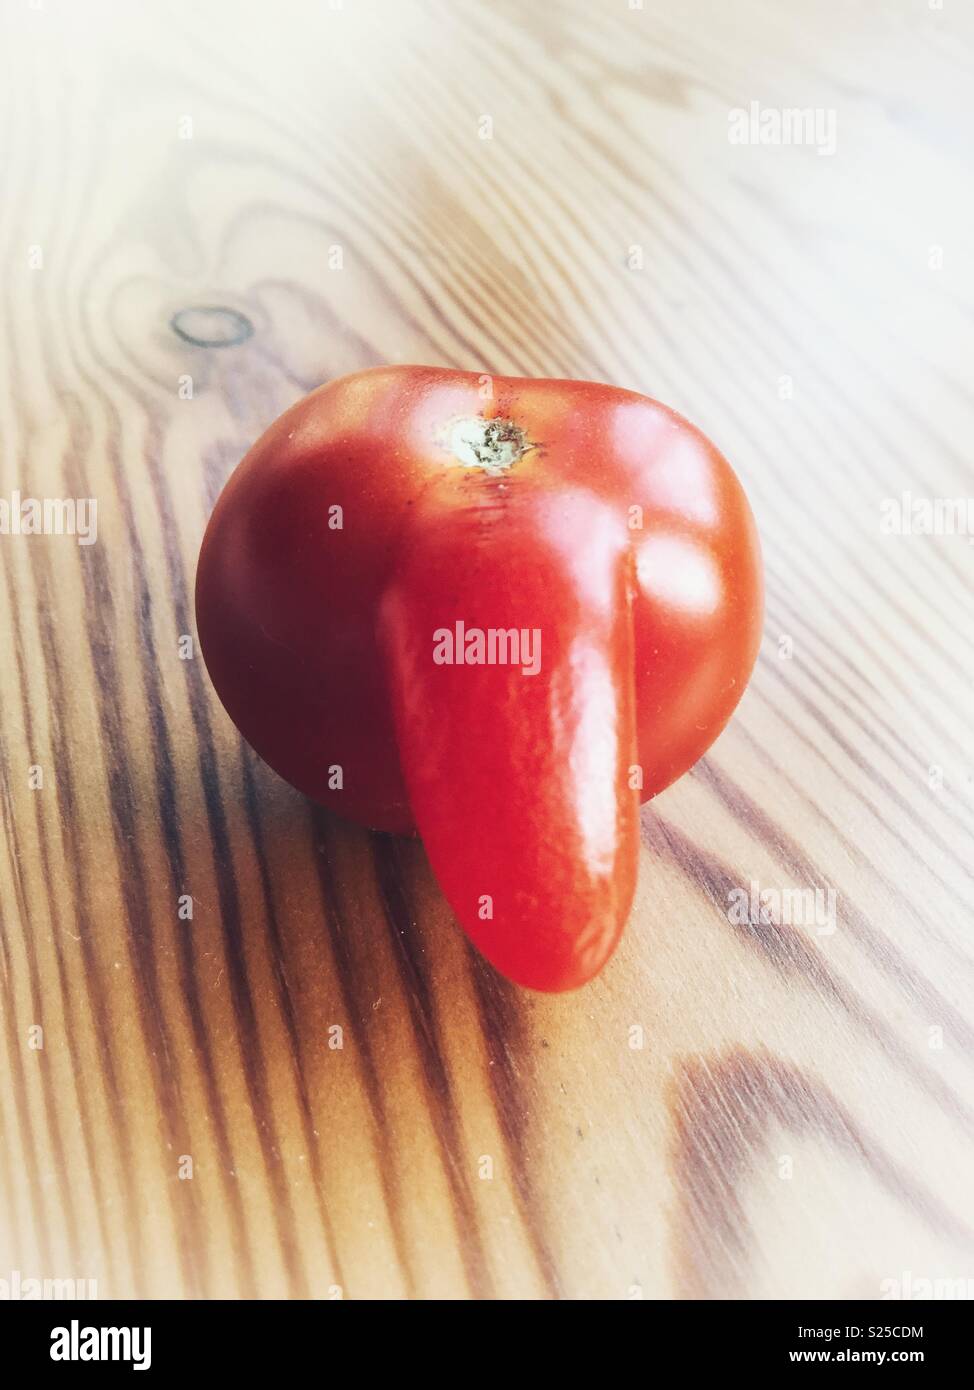 Misshapen tomato Stock Photo